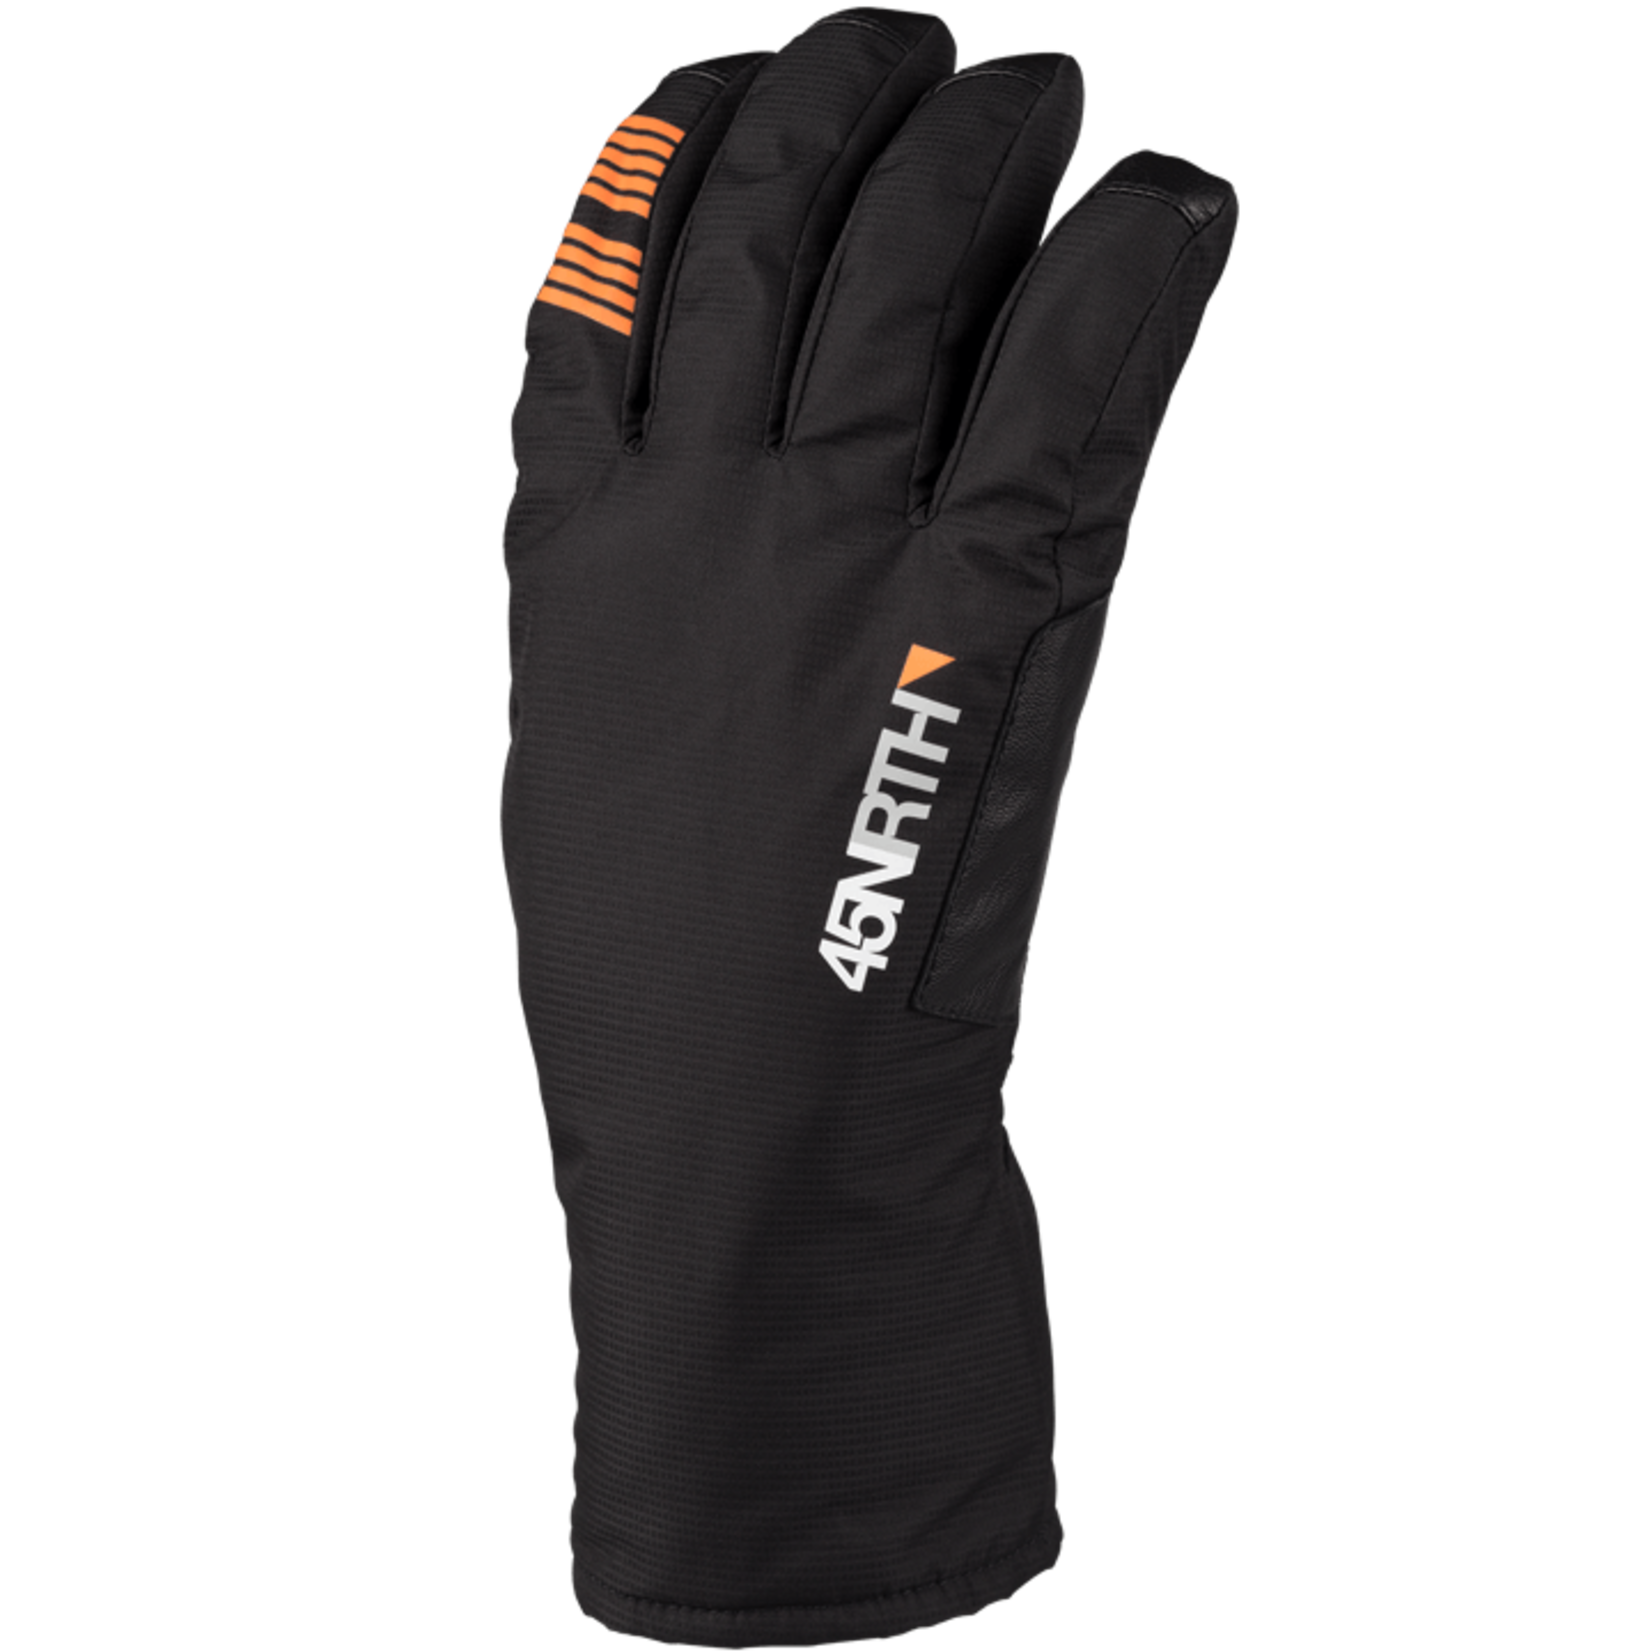 45NRTH Sturmfist 4 Extreme Winter Double Glove S